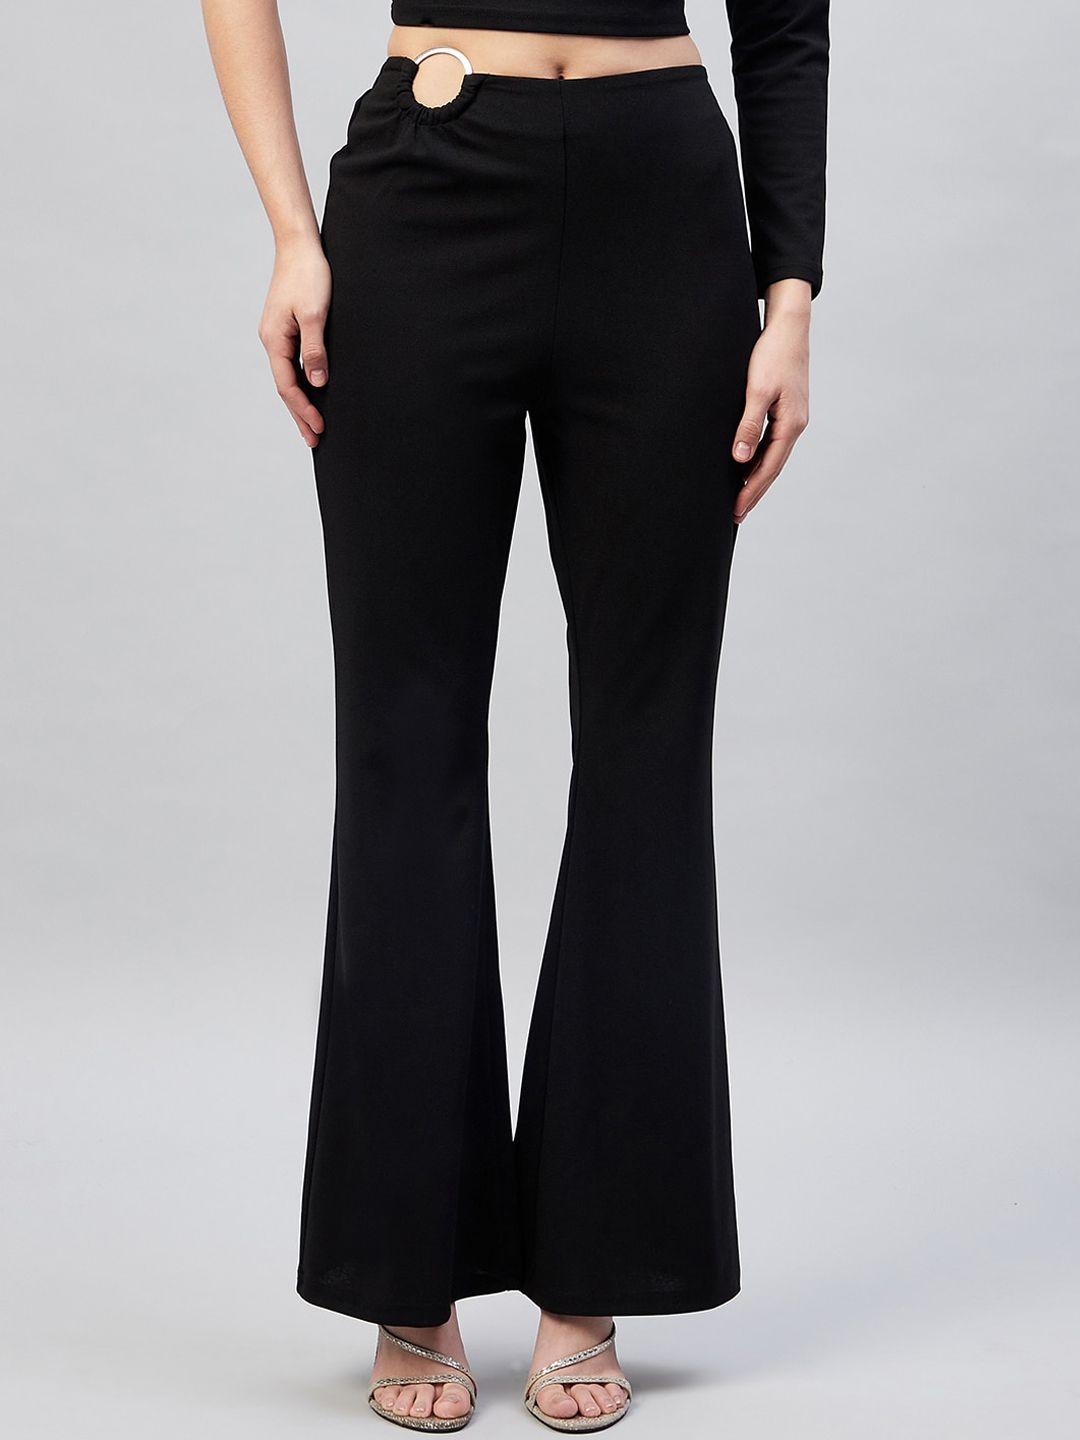 carlton-london-women-straight-fit-trousers